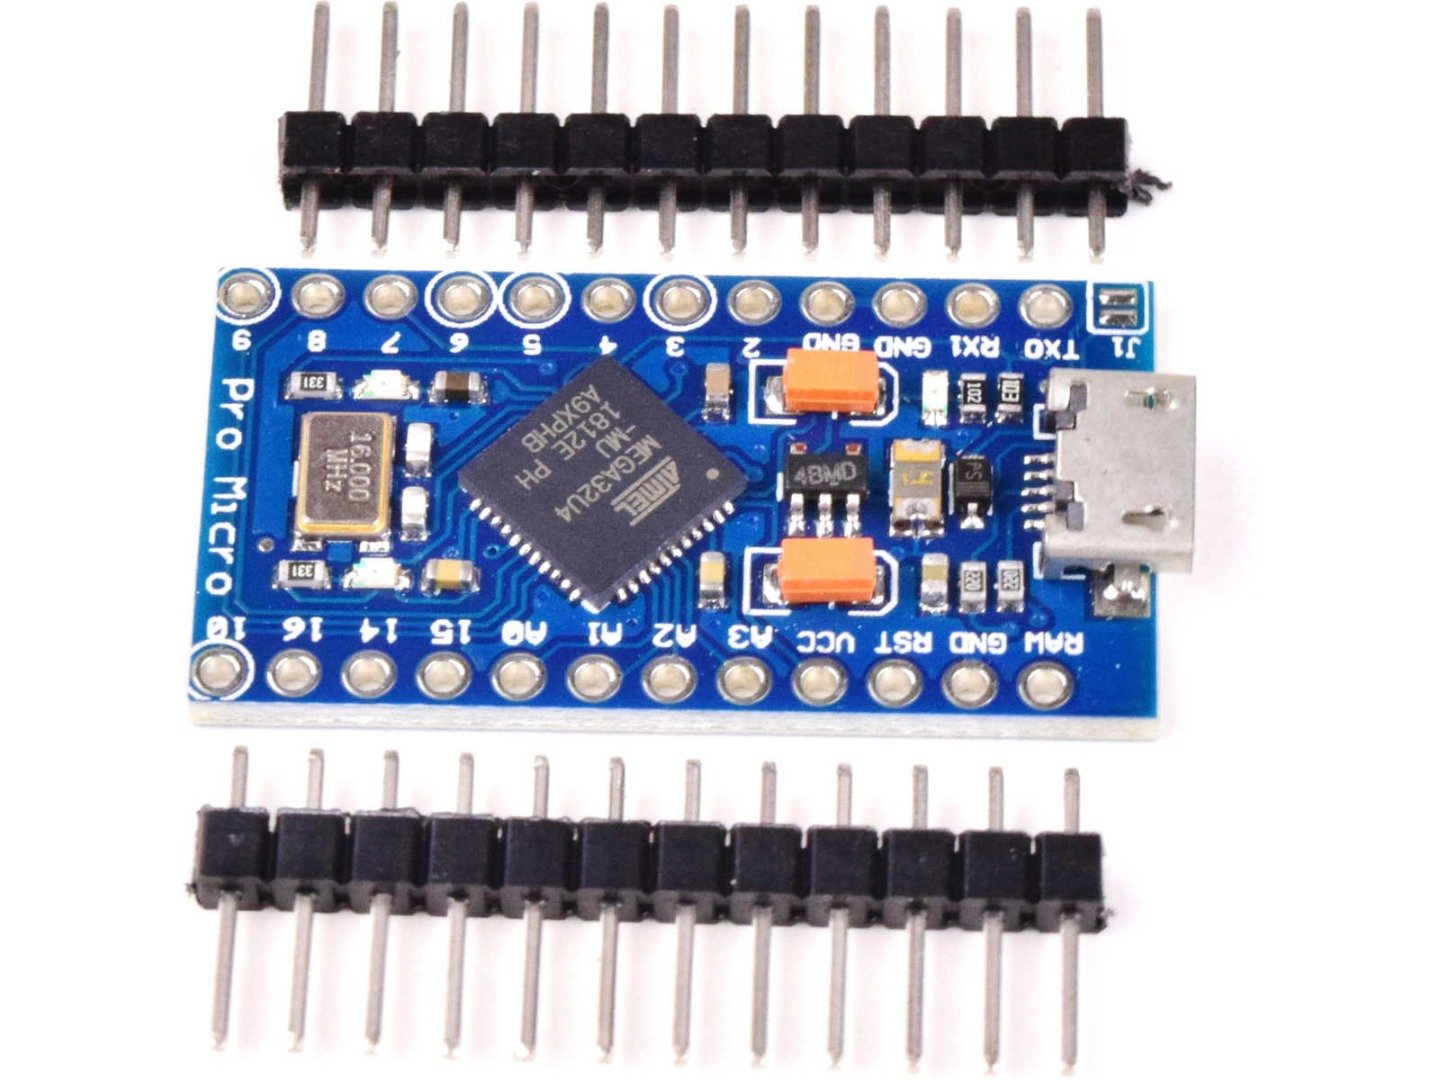 Pro Micro Atmega32u4, USB, 5V, 16MHz, 100% compatible with Arduino 4